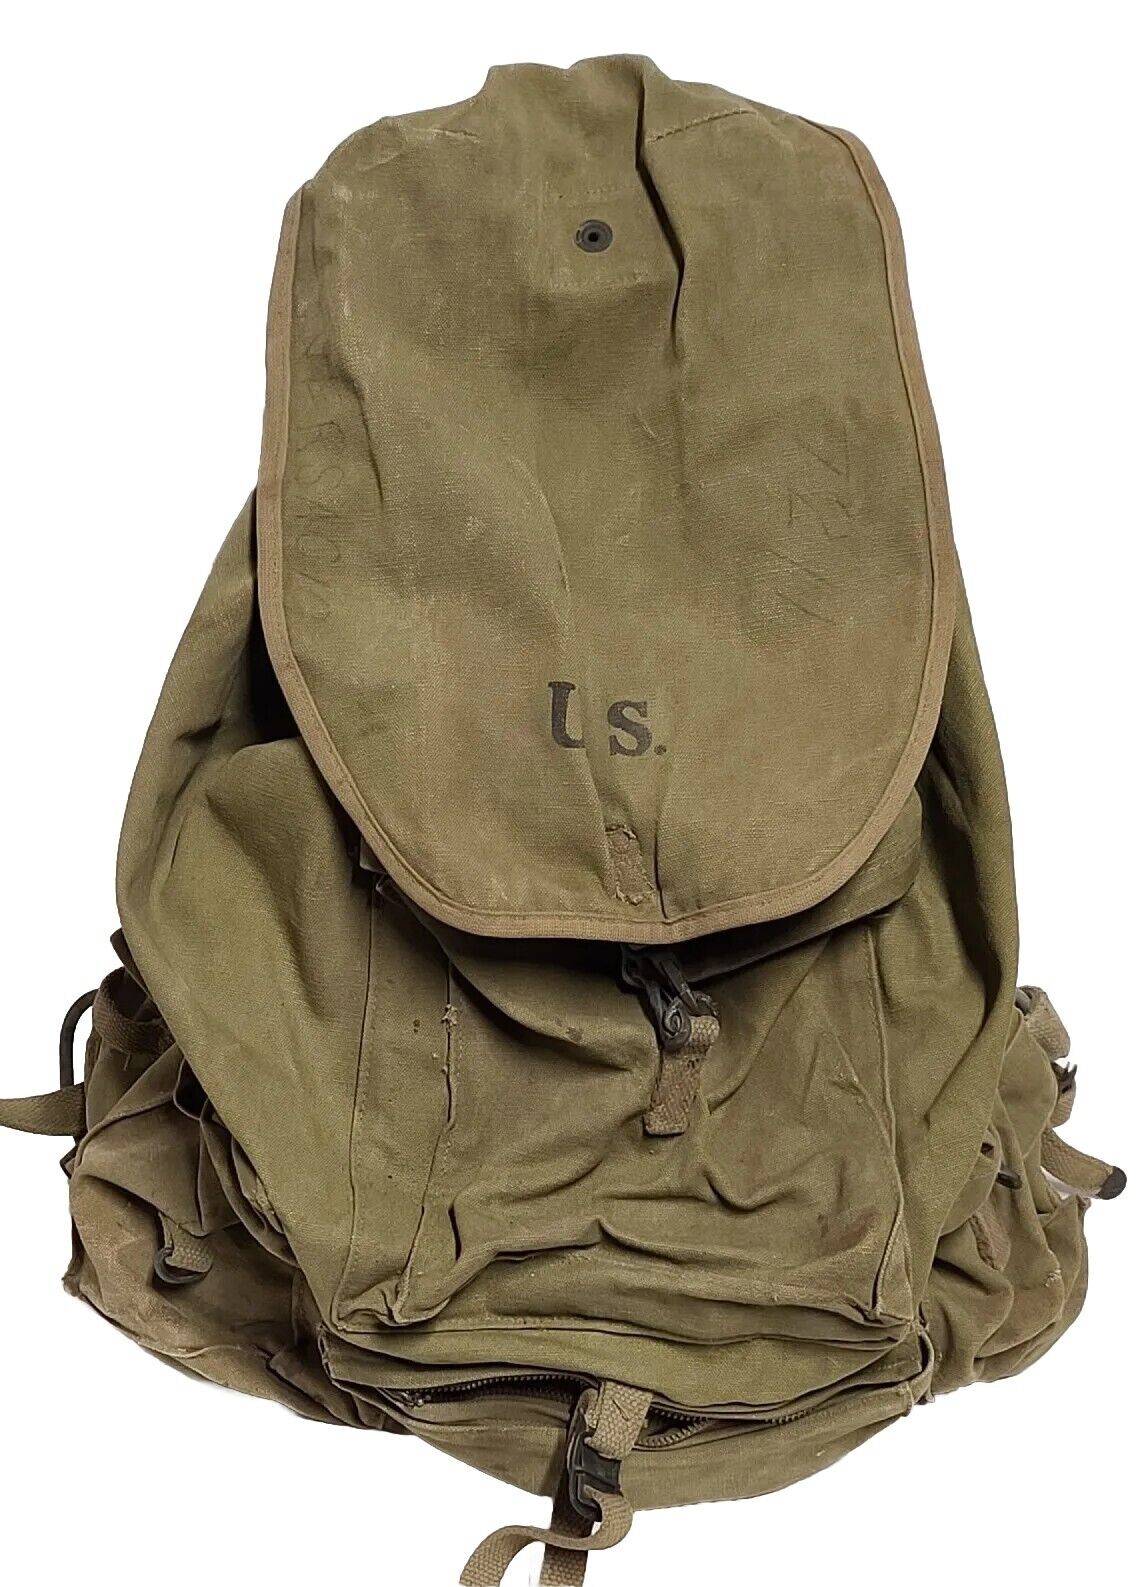 VINTAGE WWII U.S. Rucksack Backpack, Metal Frame